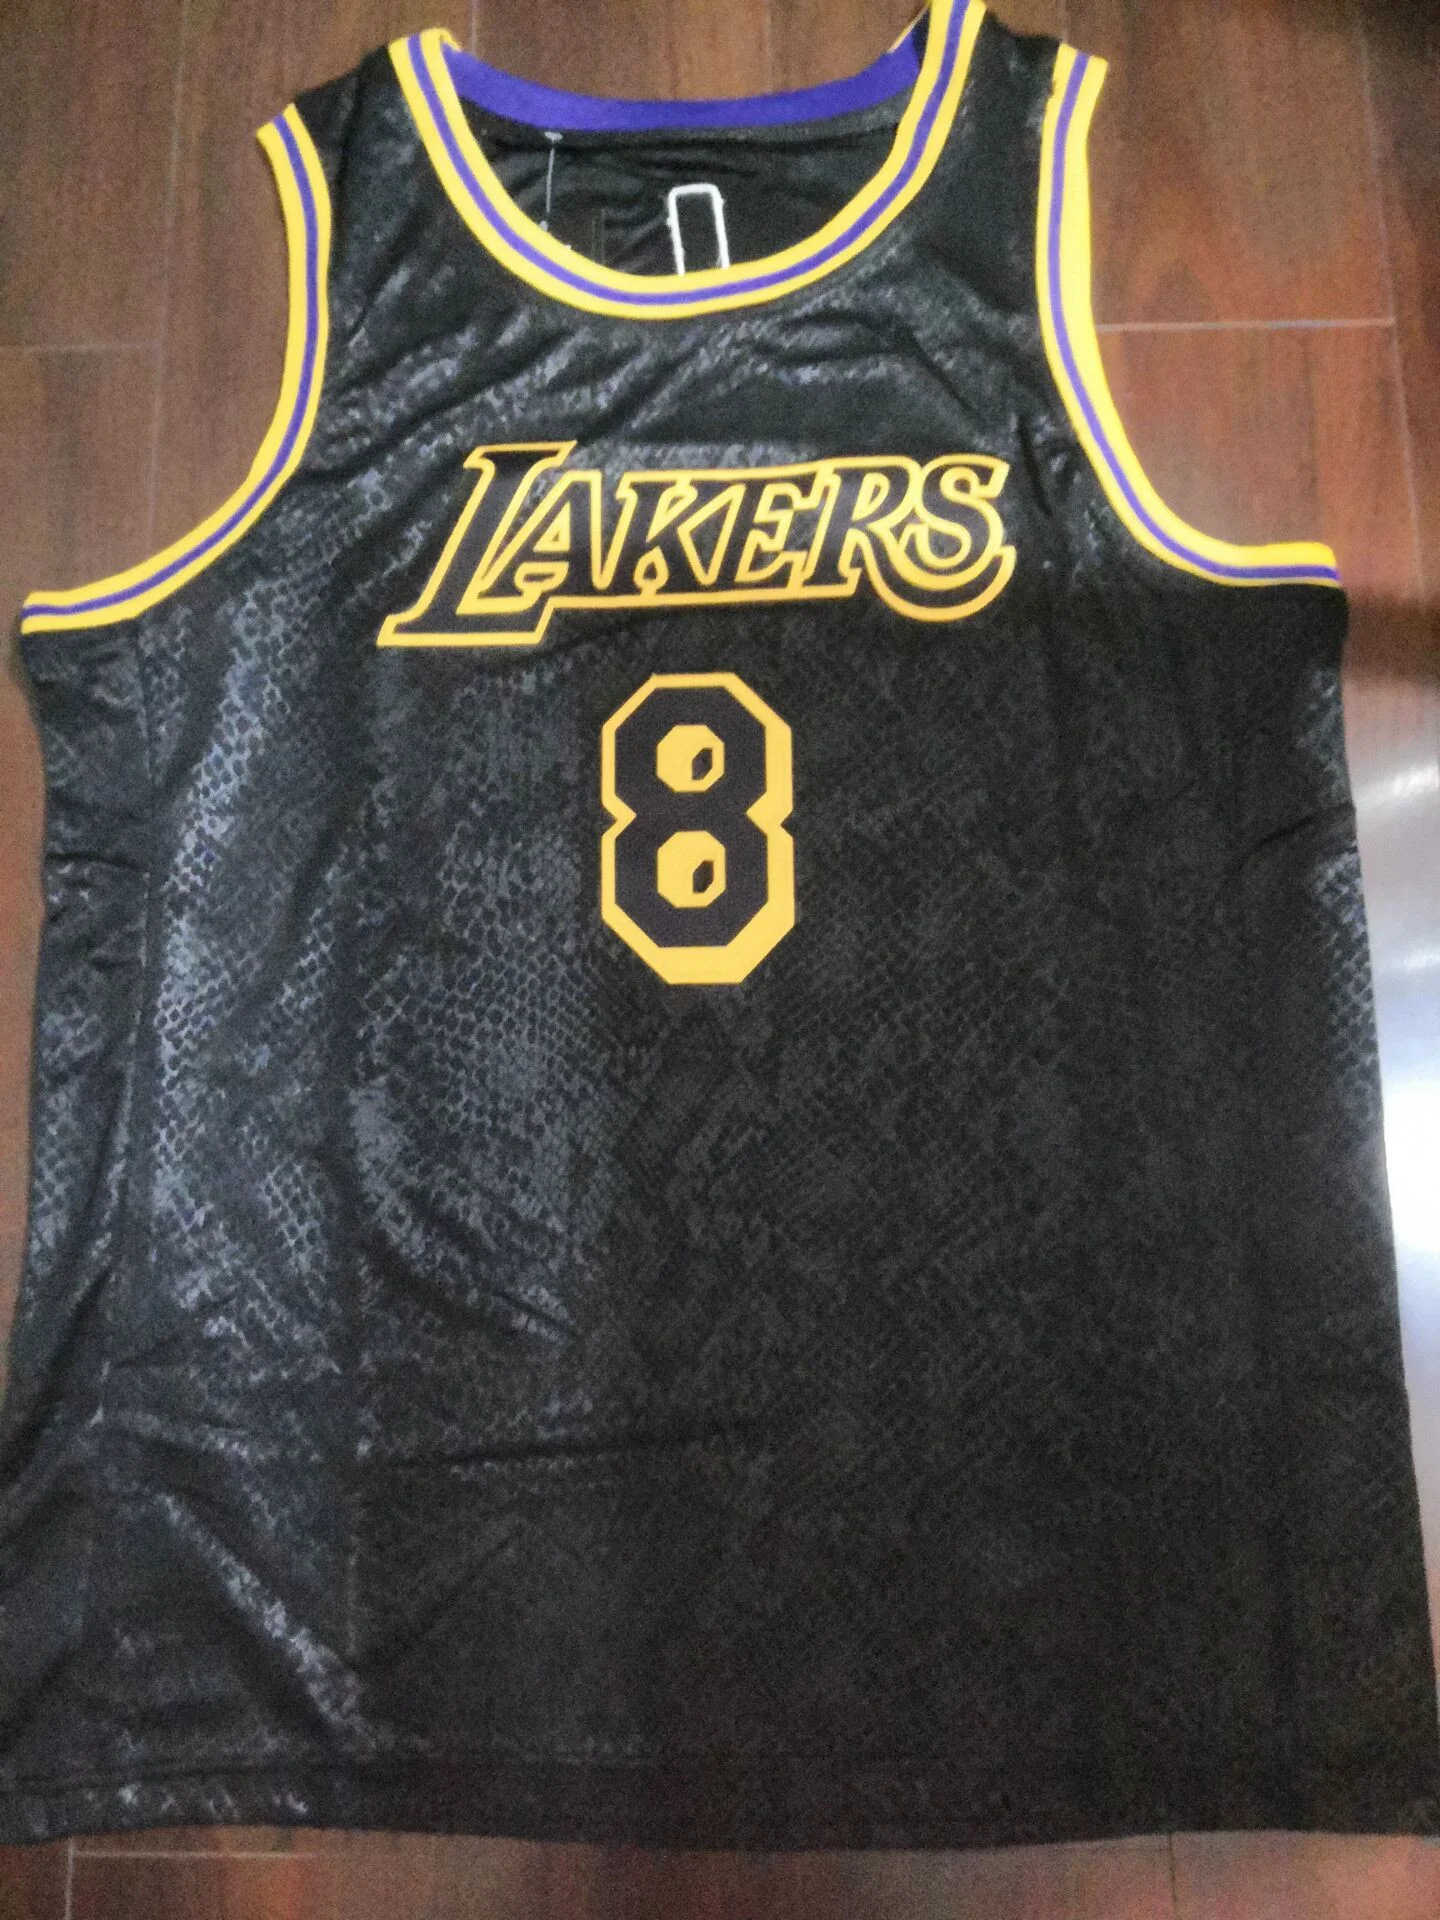 Best Quality New Wholesale China Custom Cheap Los Angeles Stitched Basketball Jersey Sports Team 8 24 Kobe Bryant Black